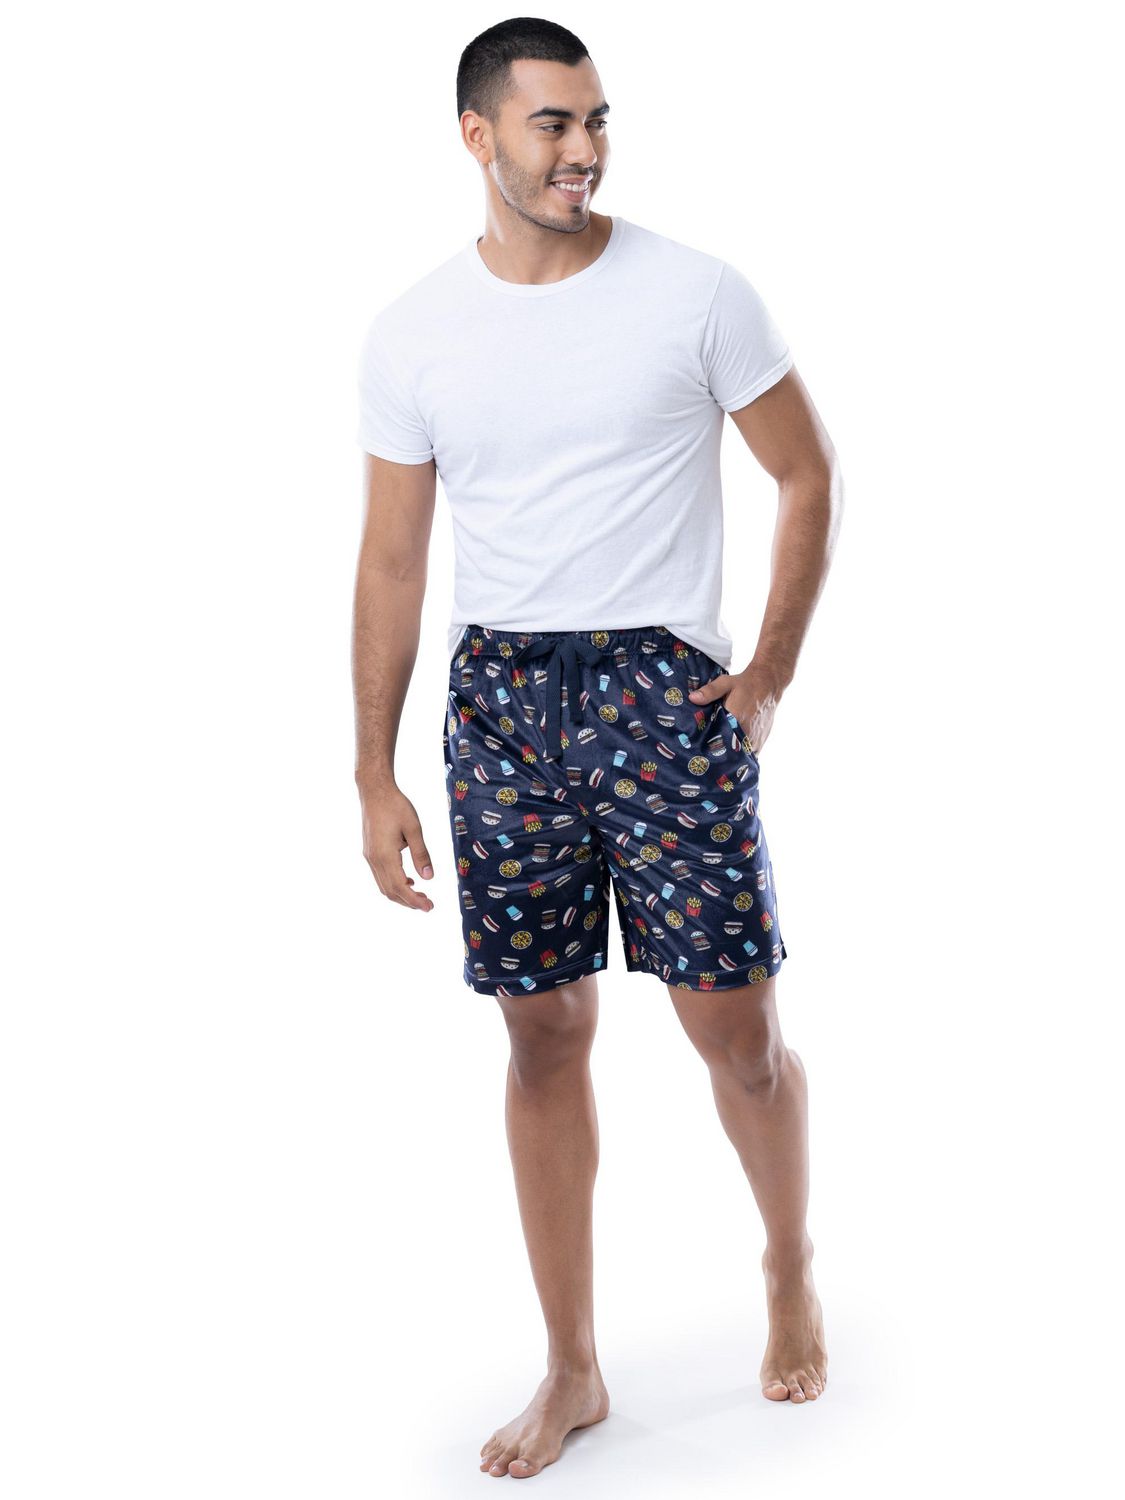 IZOD Men's Lite Touch Fleece Sleep and Lounge Pajama Pant Fast Food Print 